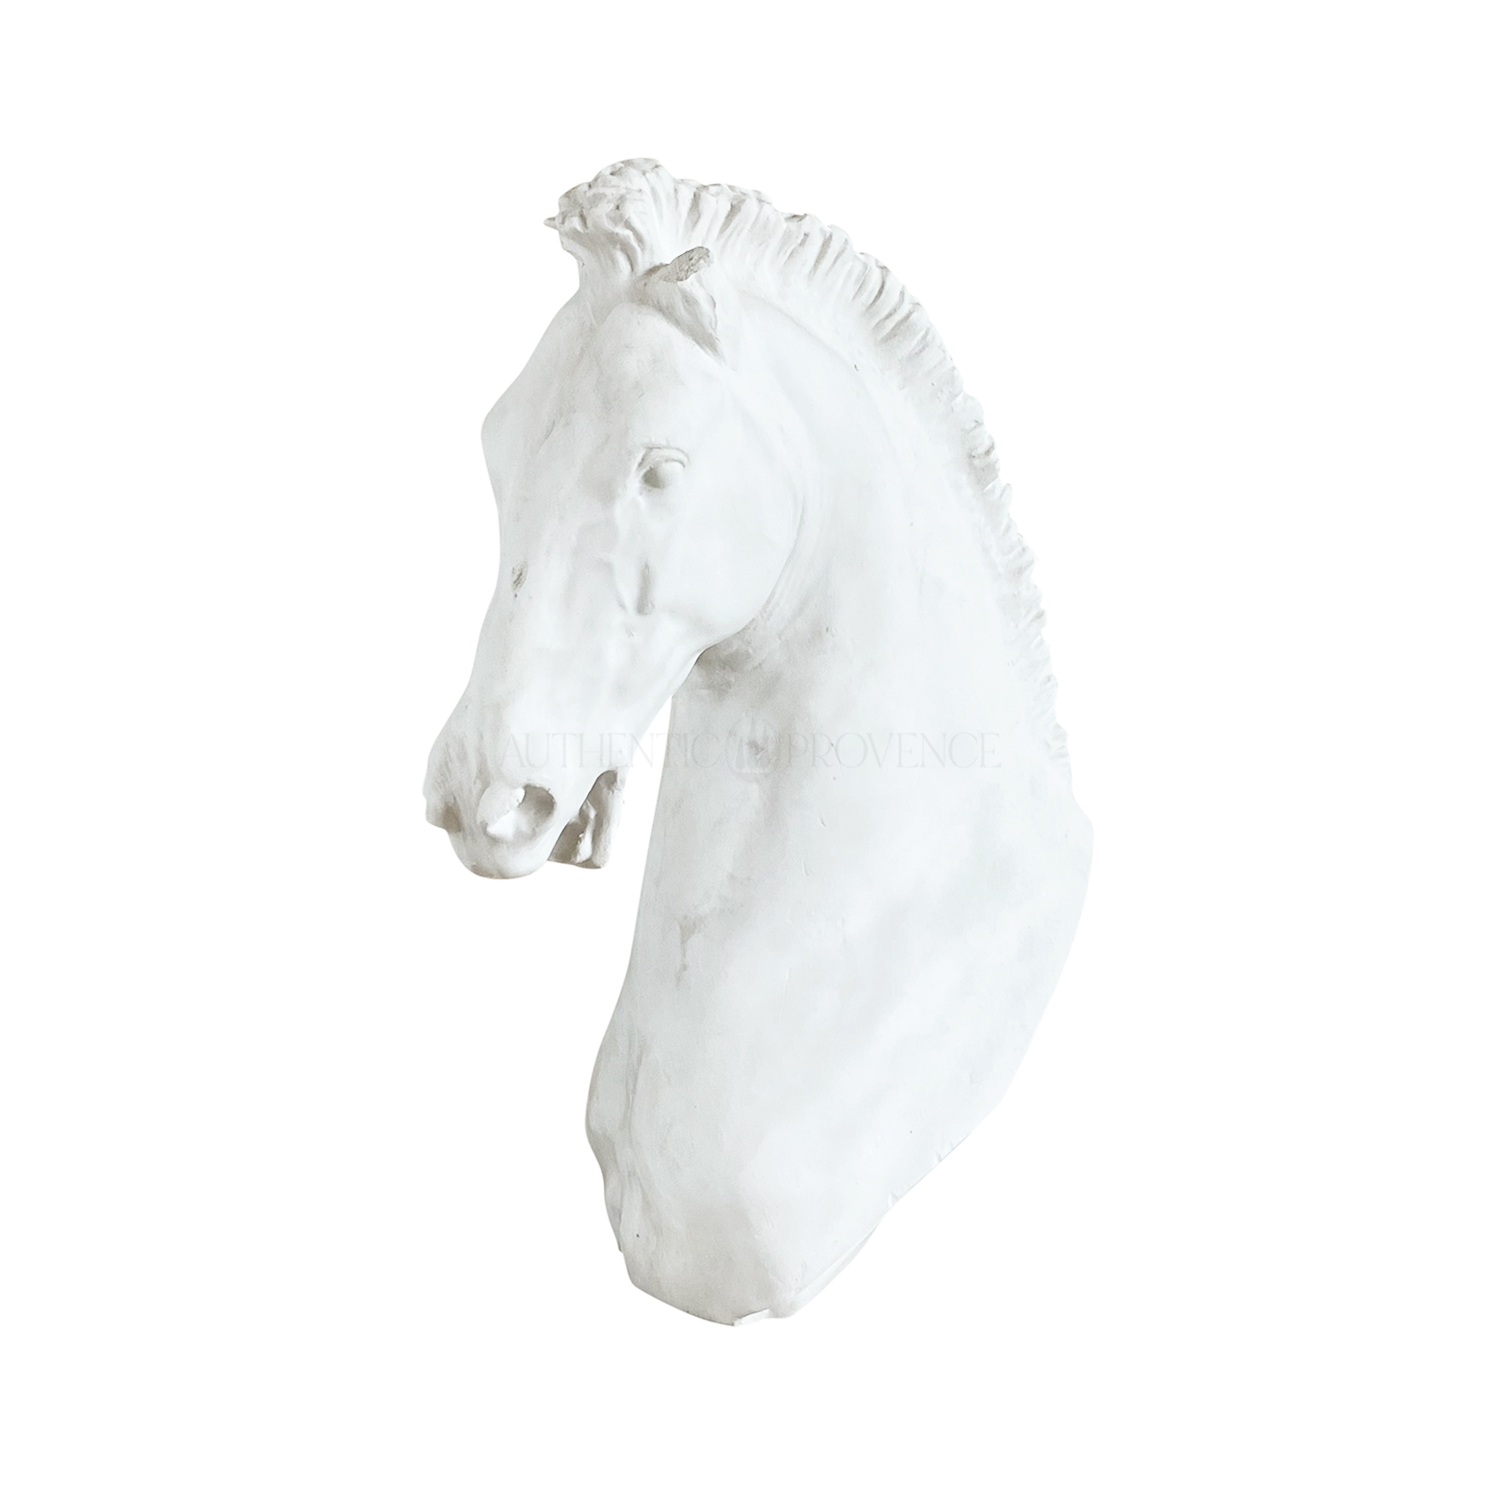 Horse of Turino in Plaster